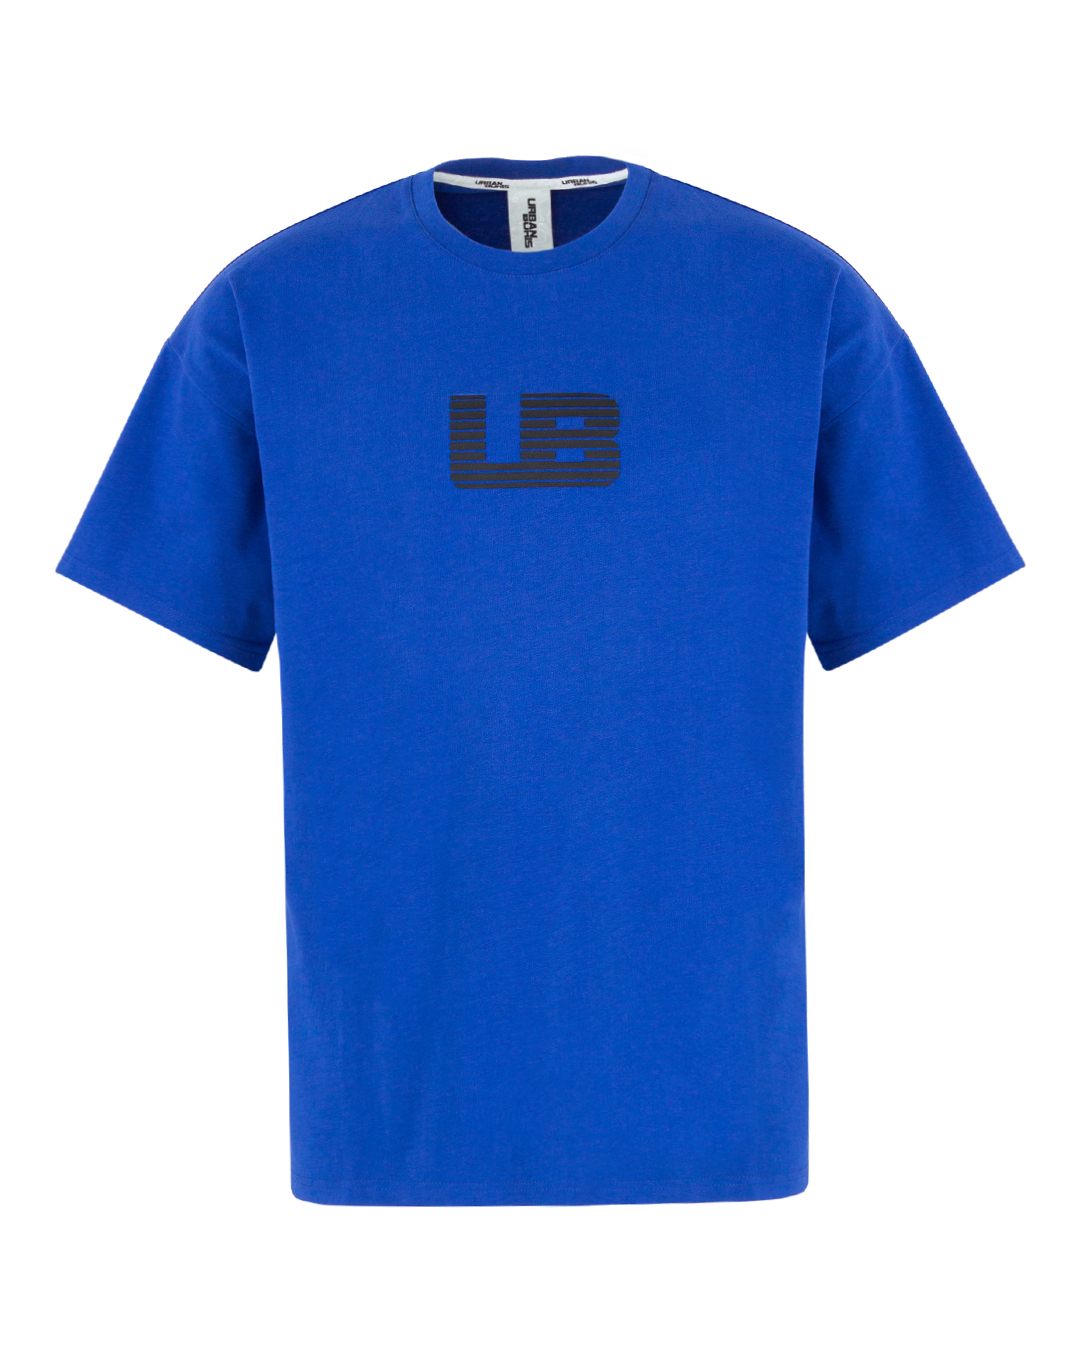 хлопковая футболка URBAN BORIS